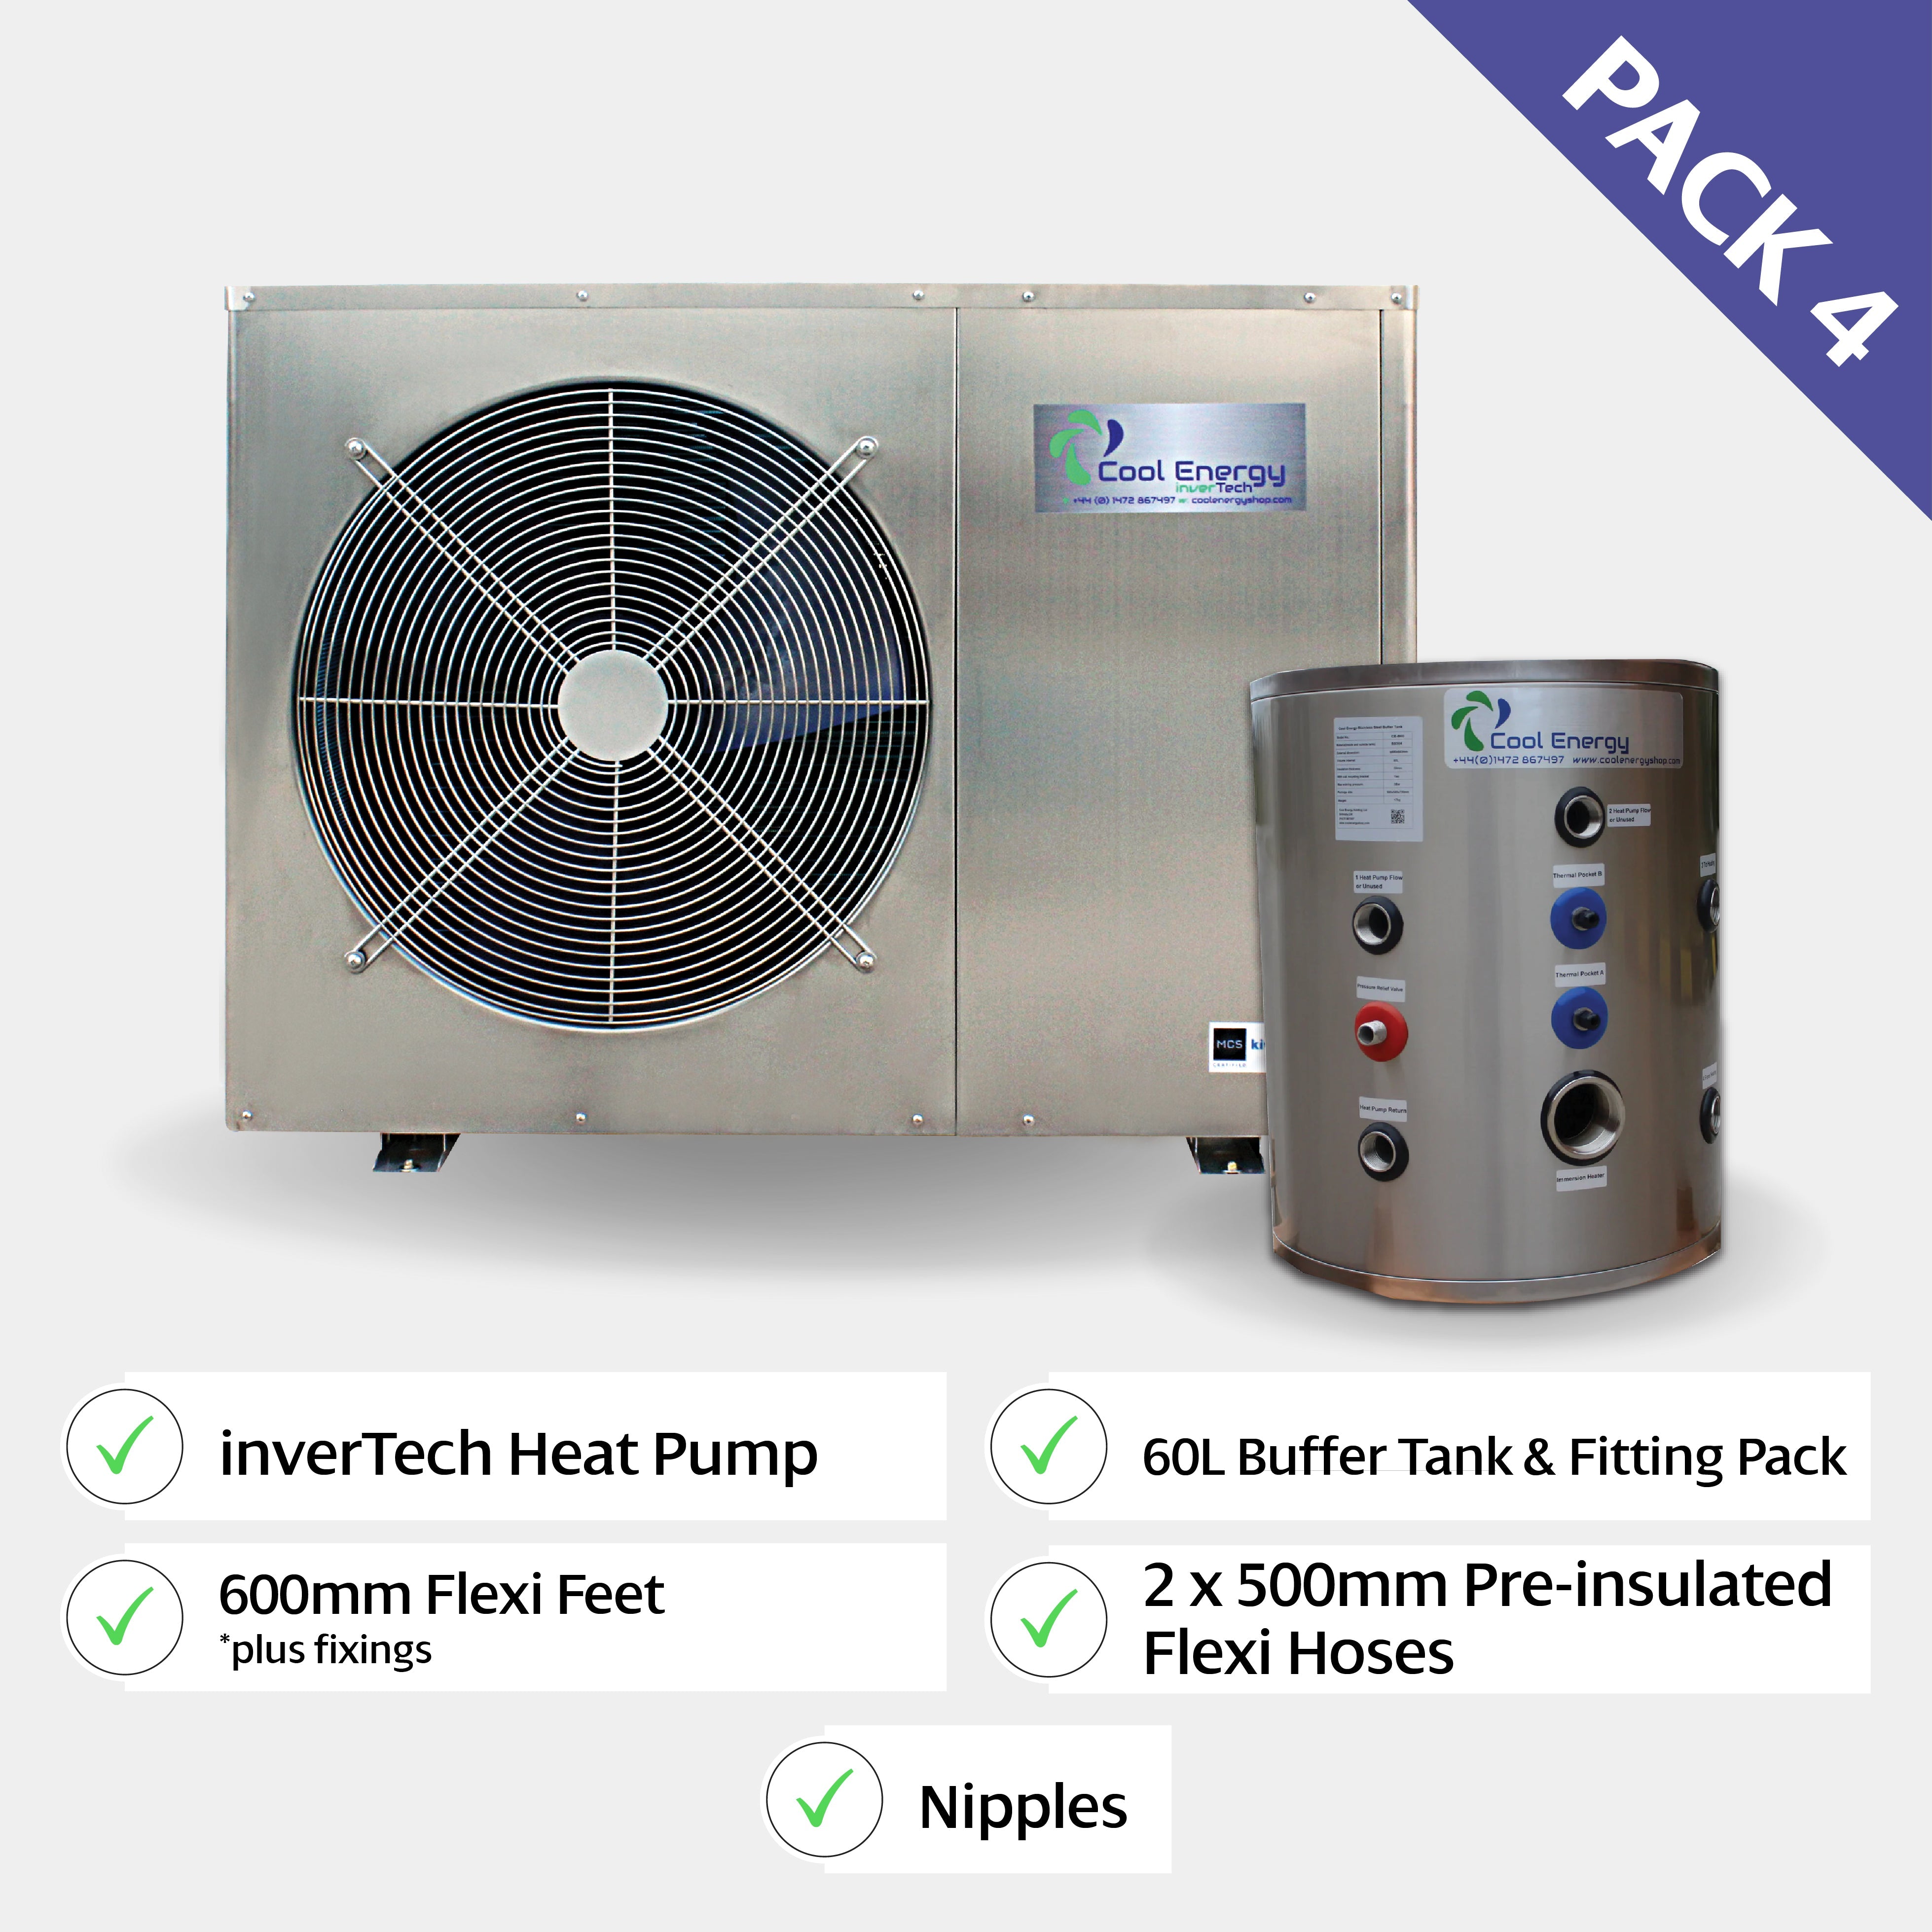 Cool Energy inverTech Heat Pump Package (Pack 4) - Heat Pump Packages - Cool Energy Shop